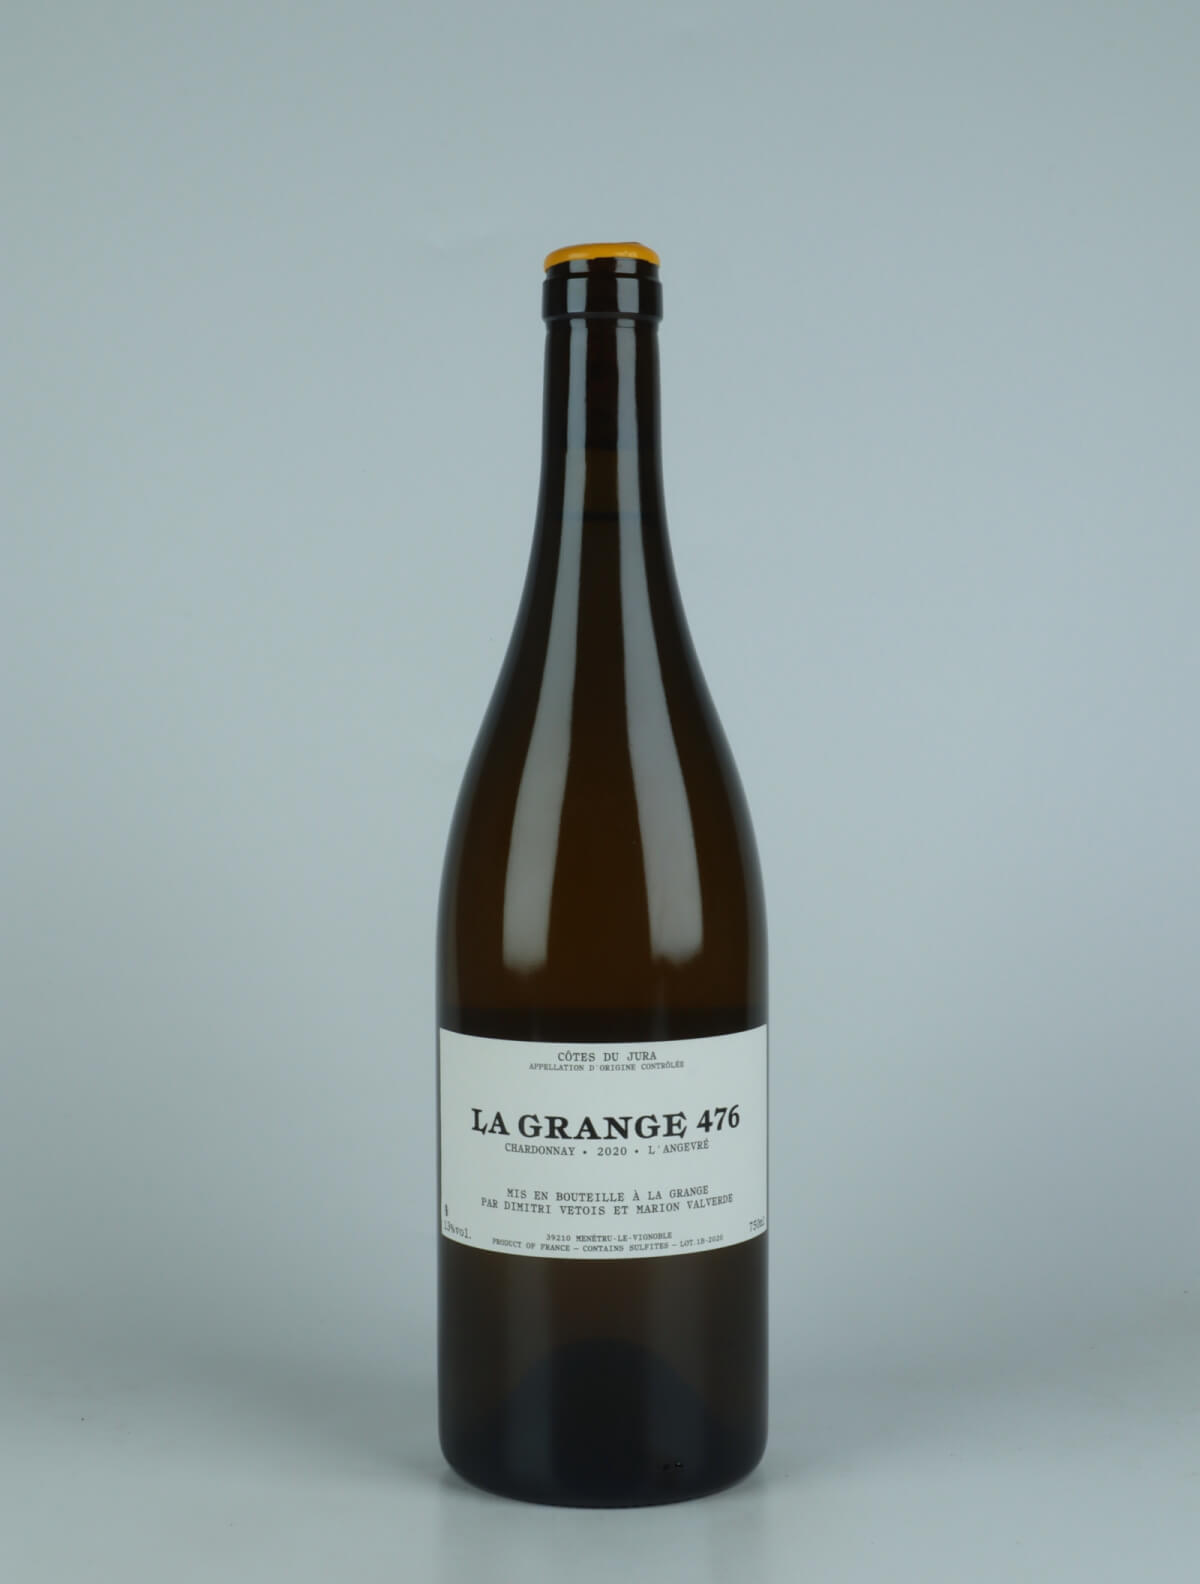 A bottle 2020 Chardonnay - L'Angevré White wine from La Grange 476, Jura in France